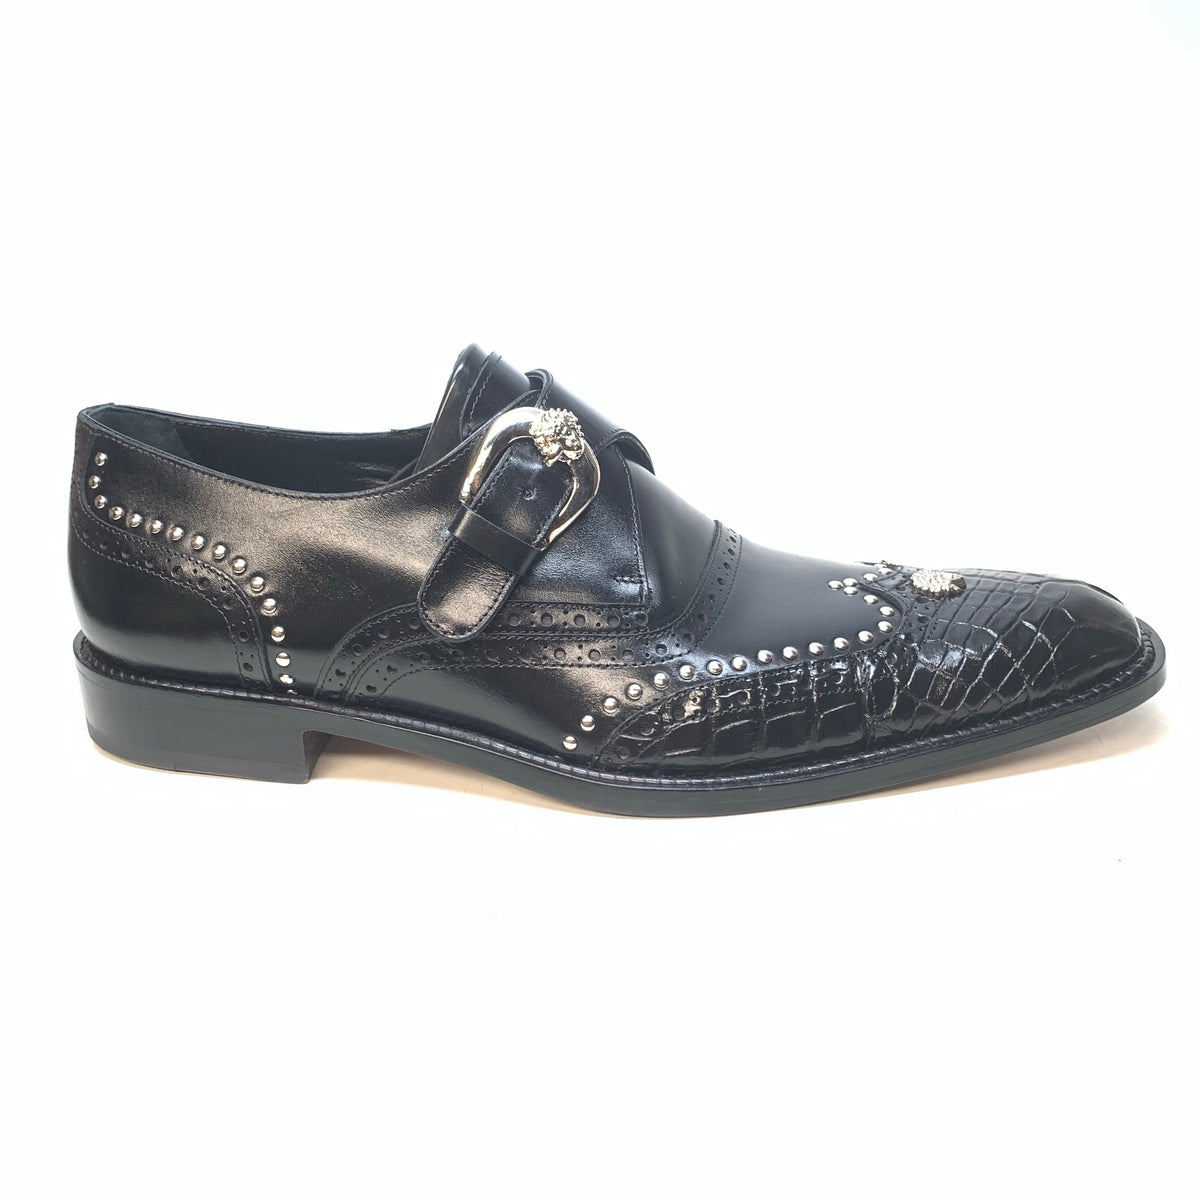 Mauri 3051 Black Alligator Studded Monk Strap Dress Shoes - Dudes Boutique